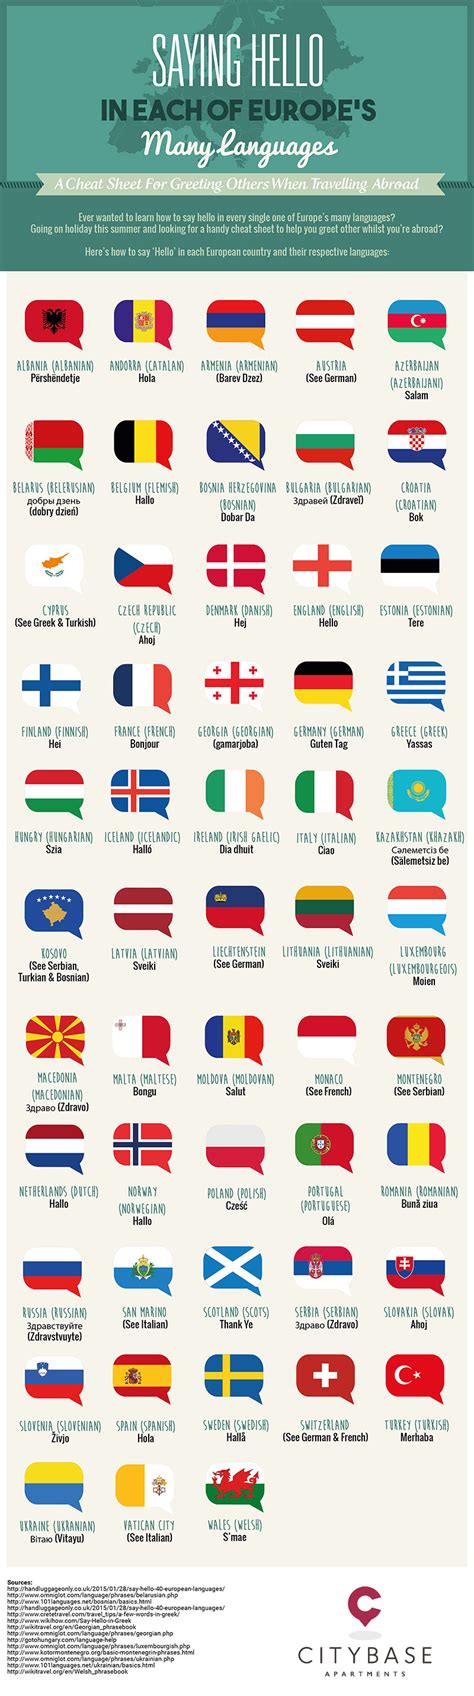 hello in european languages